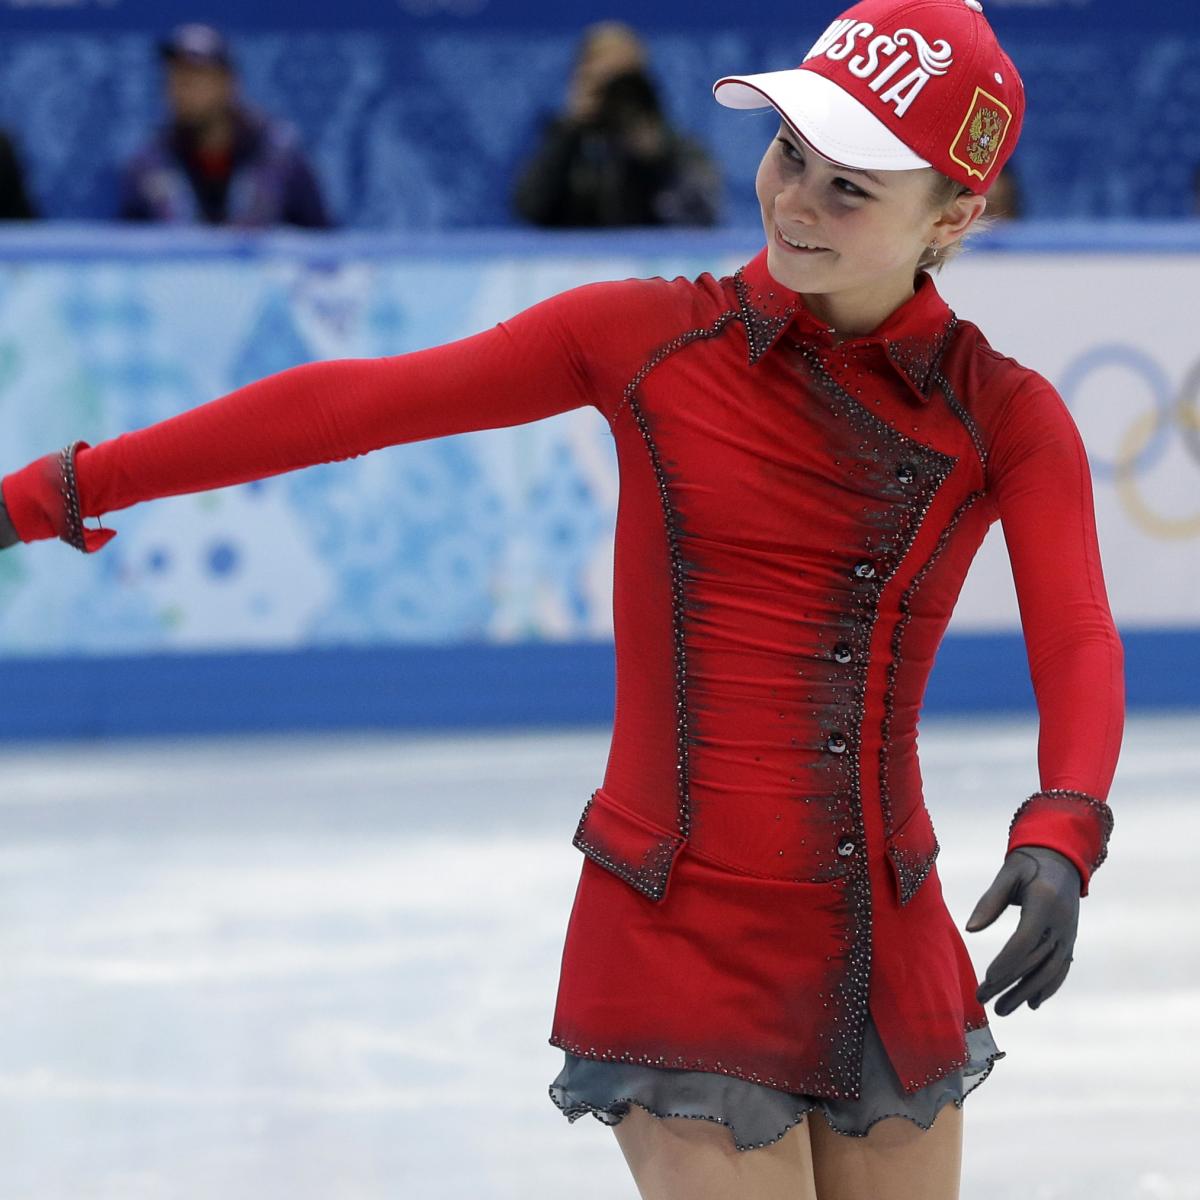 2014 Sochi Olympics: Viewers Guide | Nbc olympics 